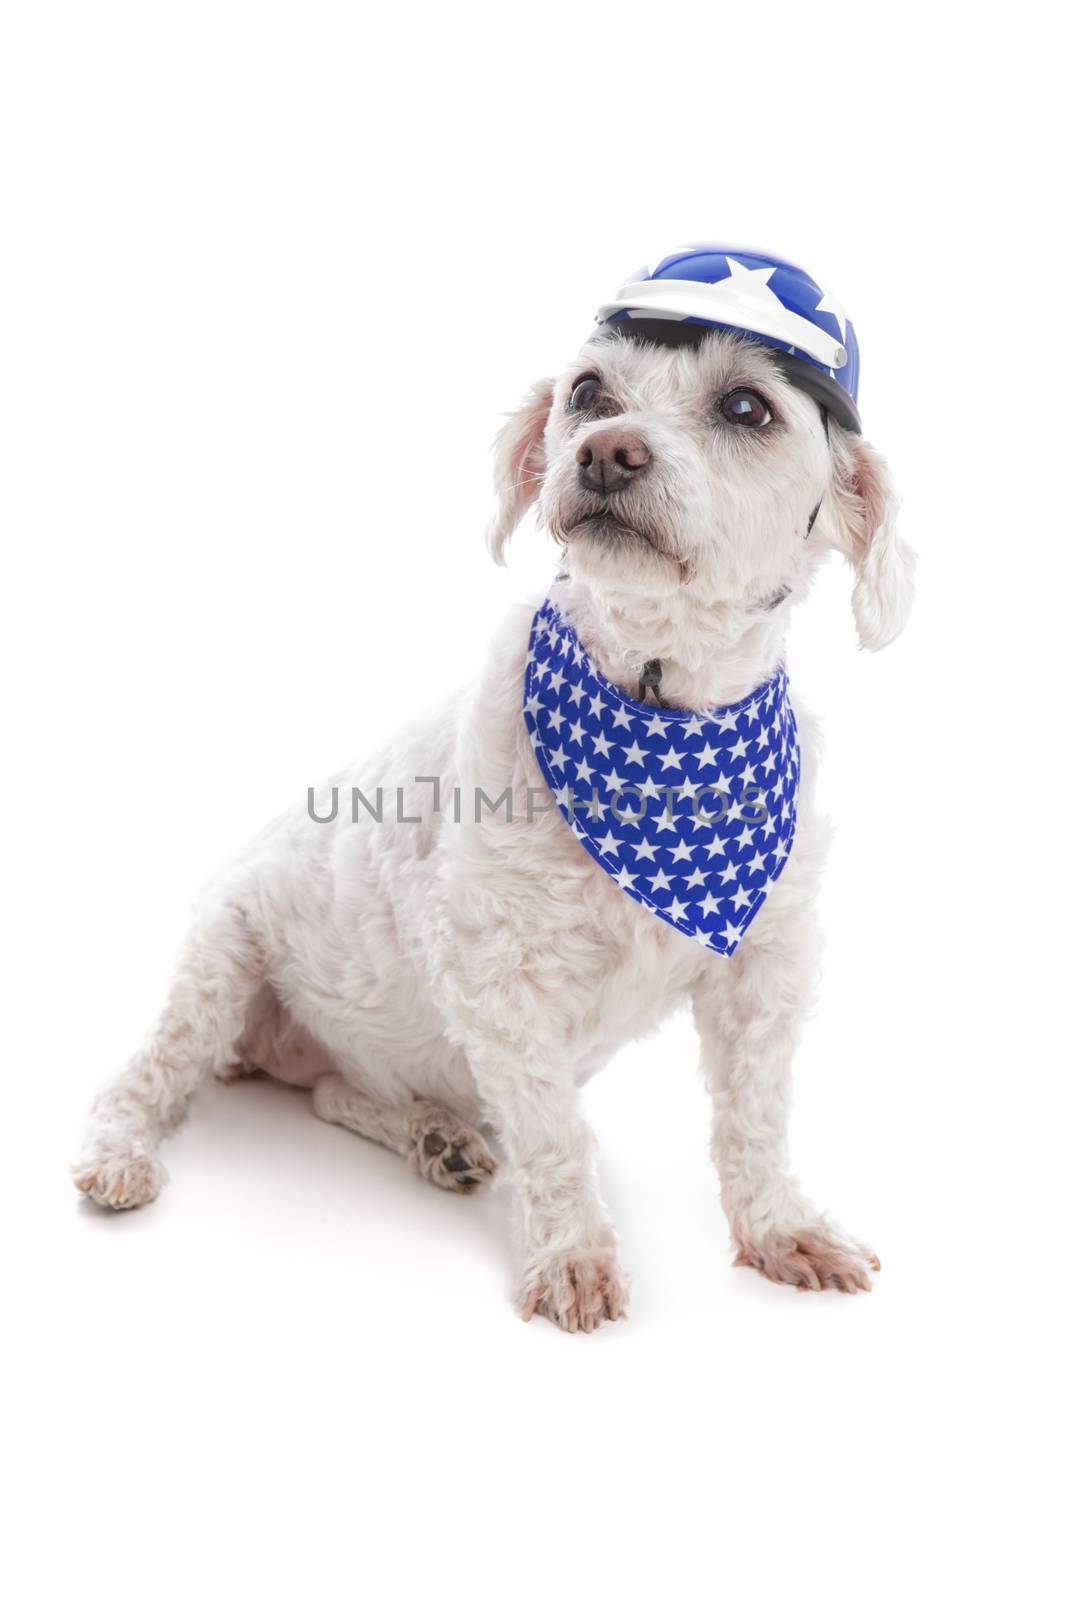 Dog wearing helmet and bandana by lovleah